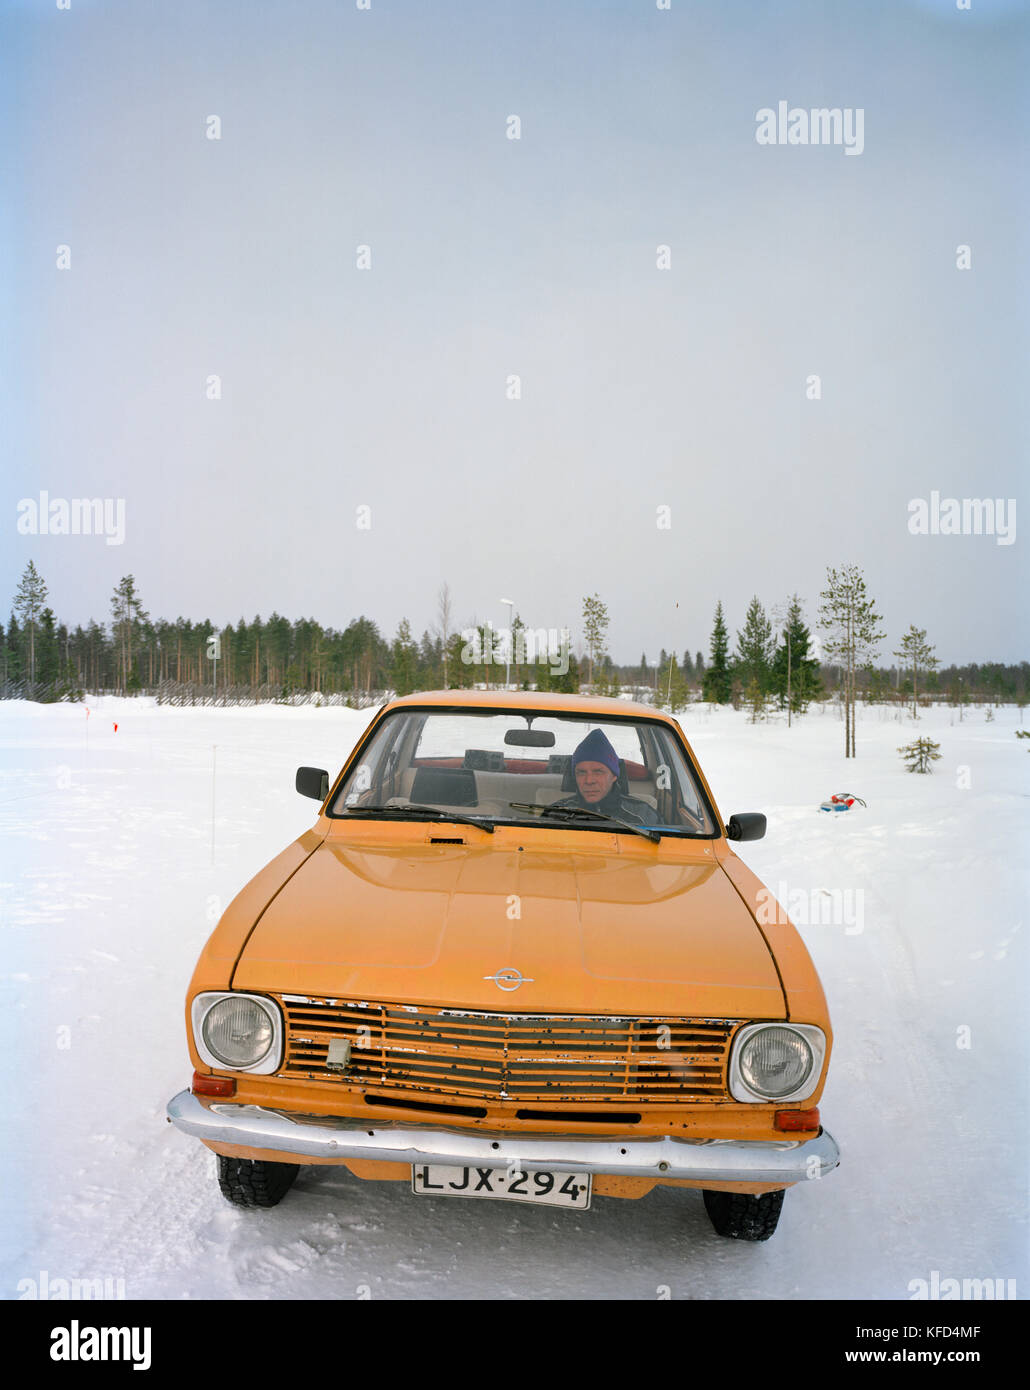 FINLAND, Rovaniemi, man sitting in a vintage car Stock Photo